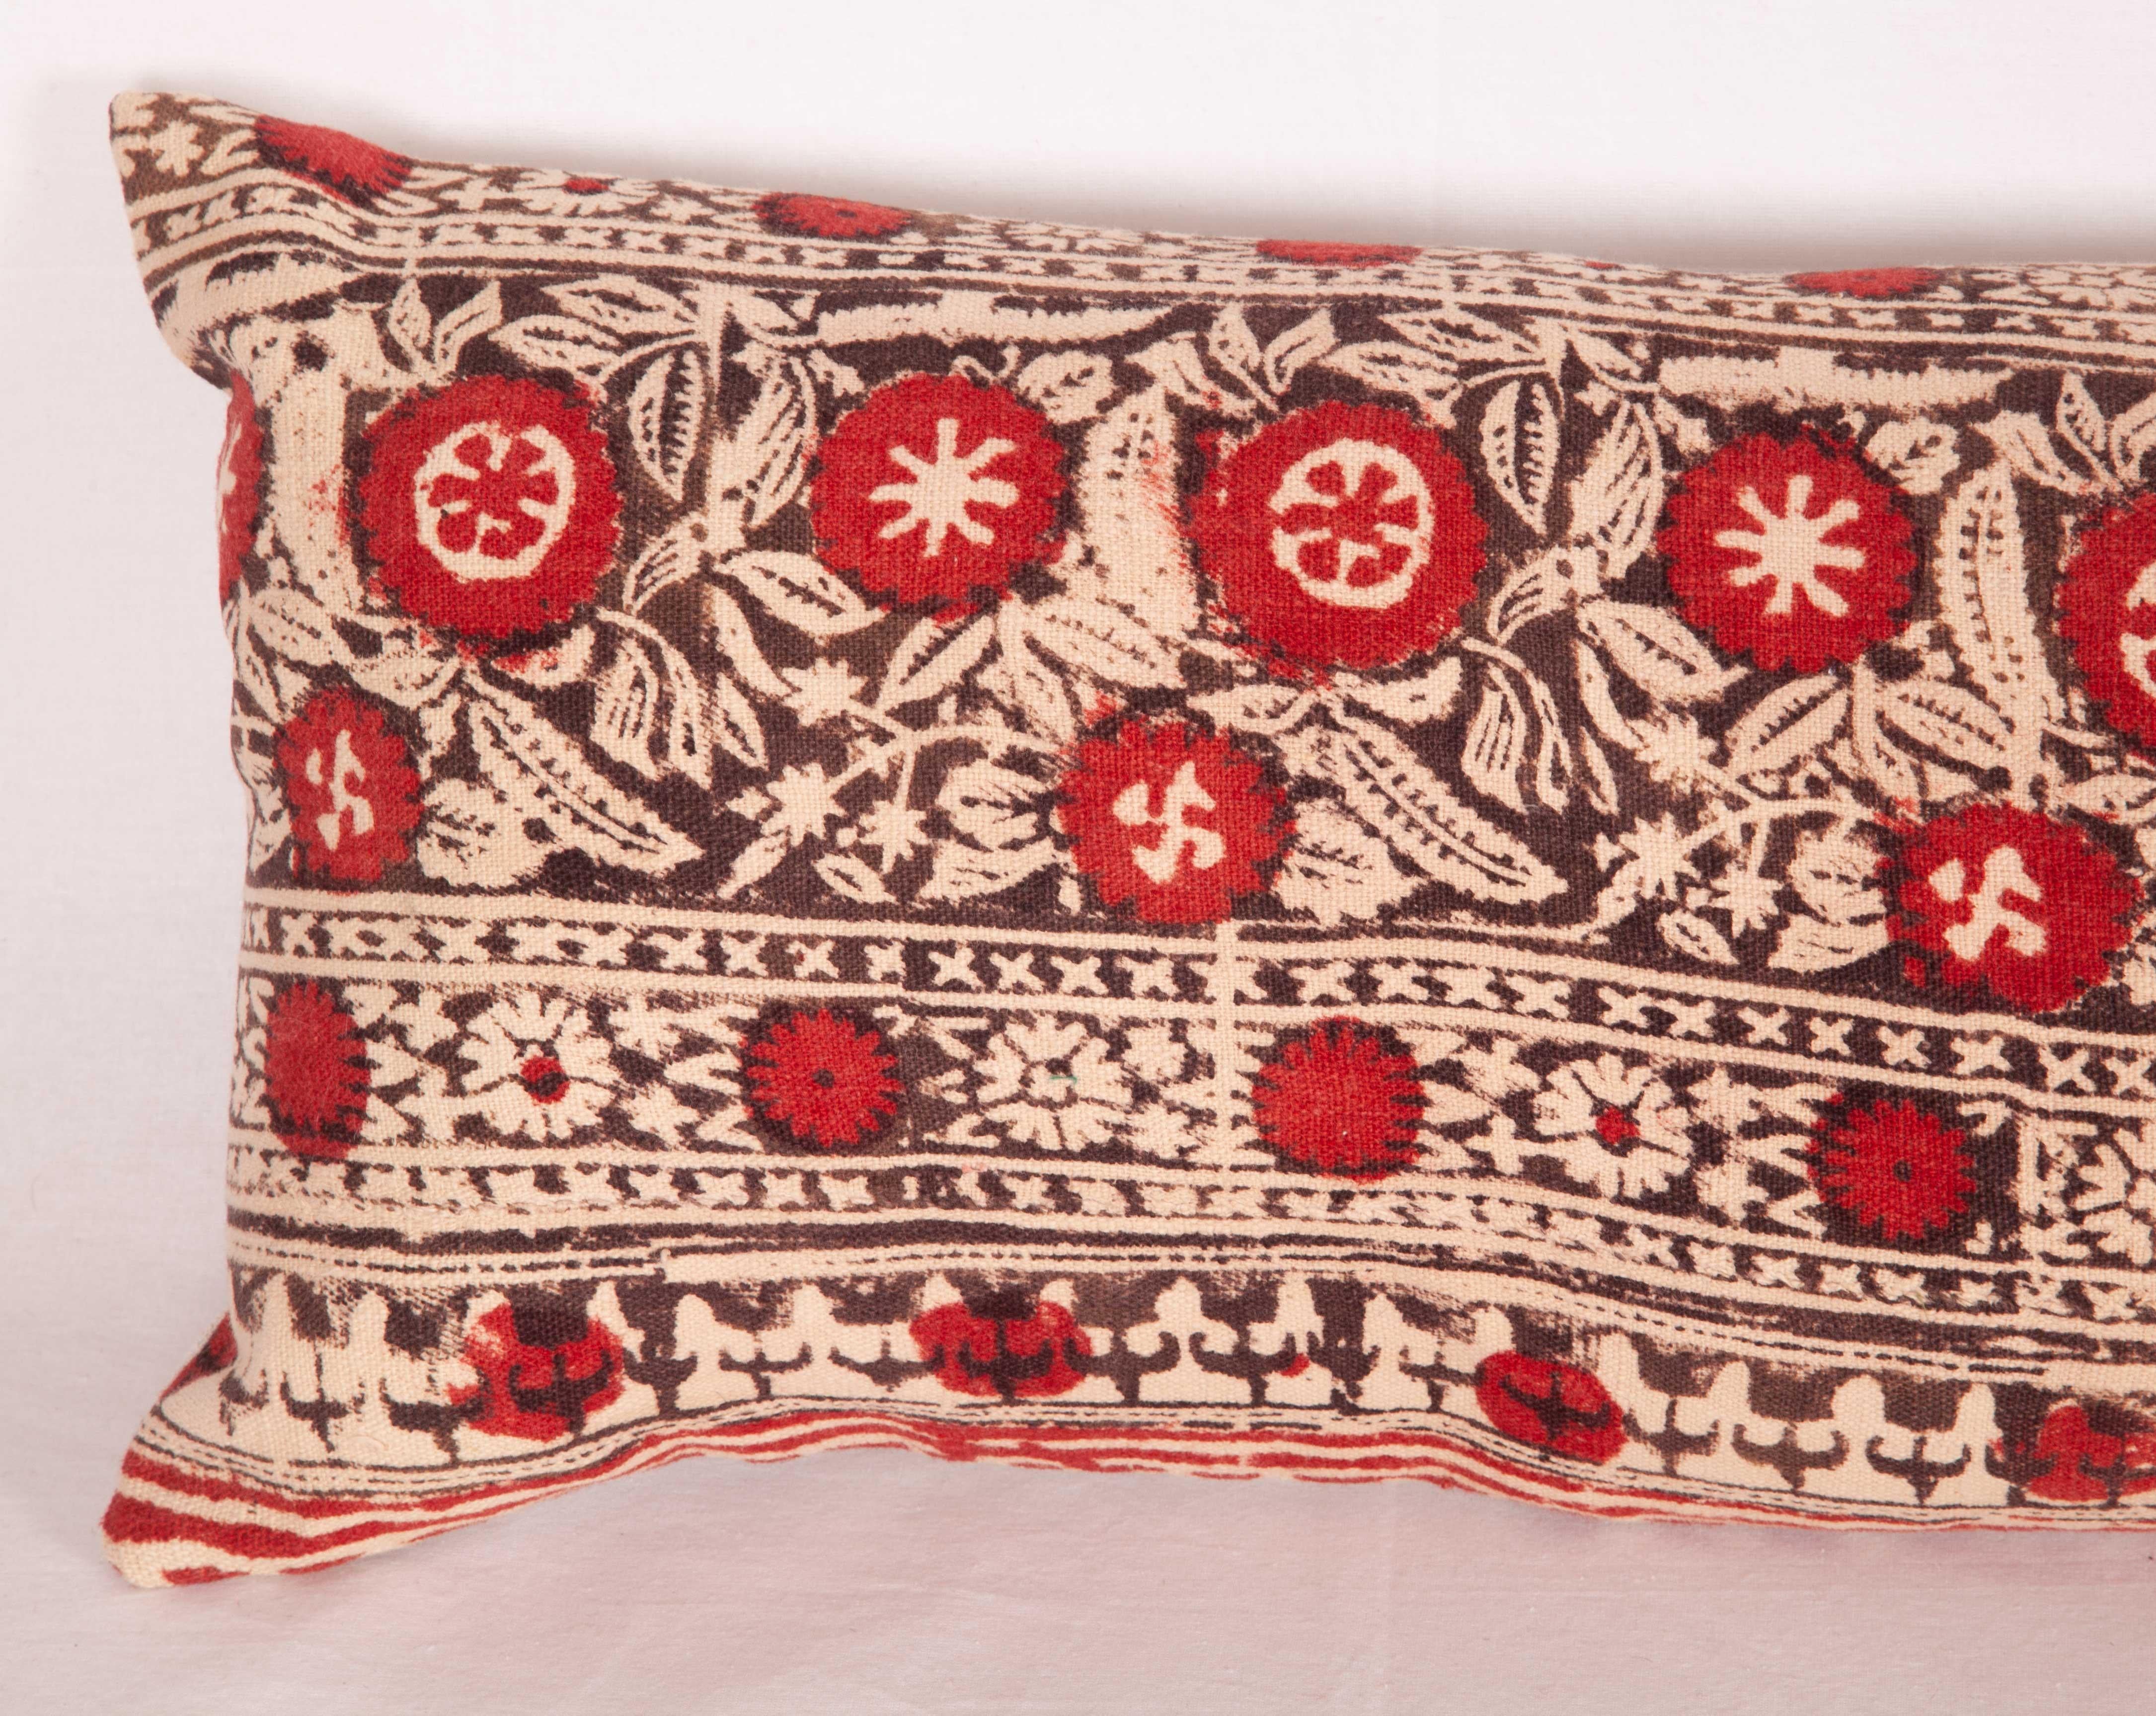 Tribal Block Print Lumbar Pillow Case Made from an Uzbek Print, Early 20th Century